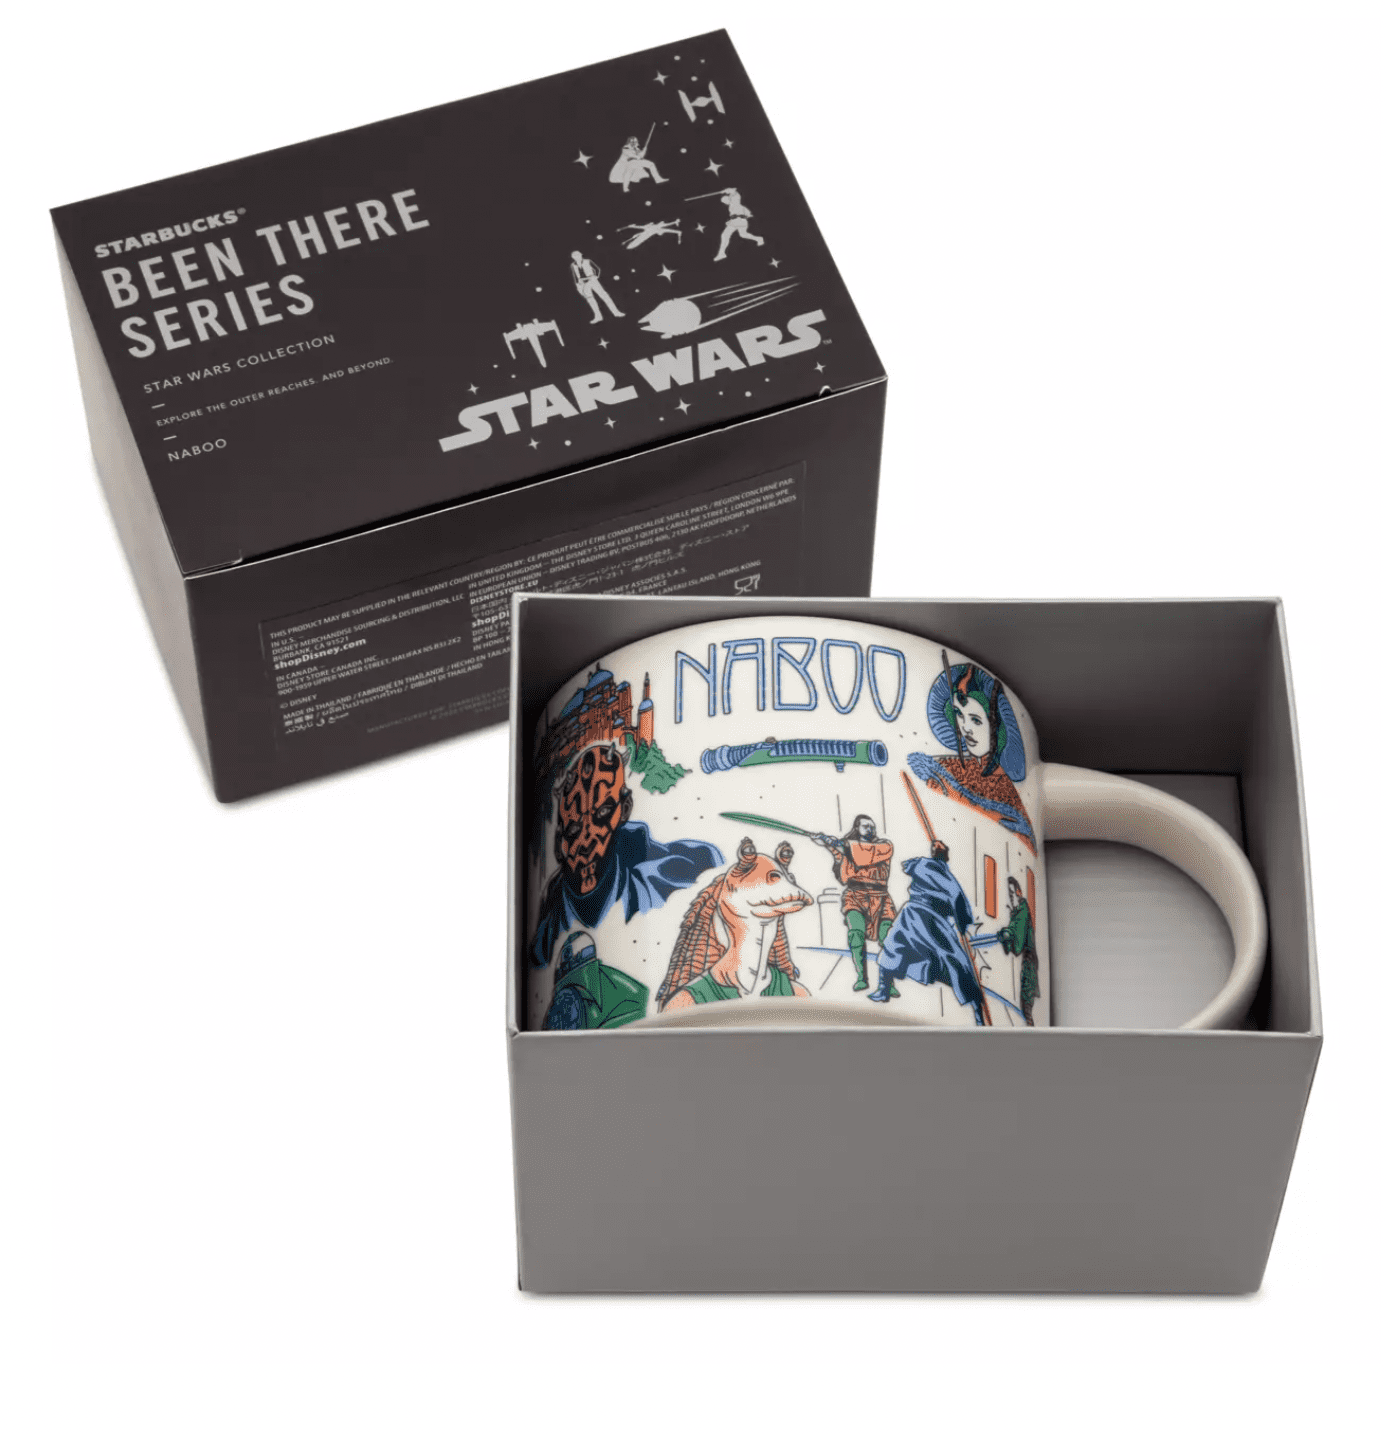 Disney Starbucks Been There Star Wars Naboo Ceramic Coffee Mug New With Box  - Walmart.Com